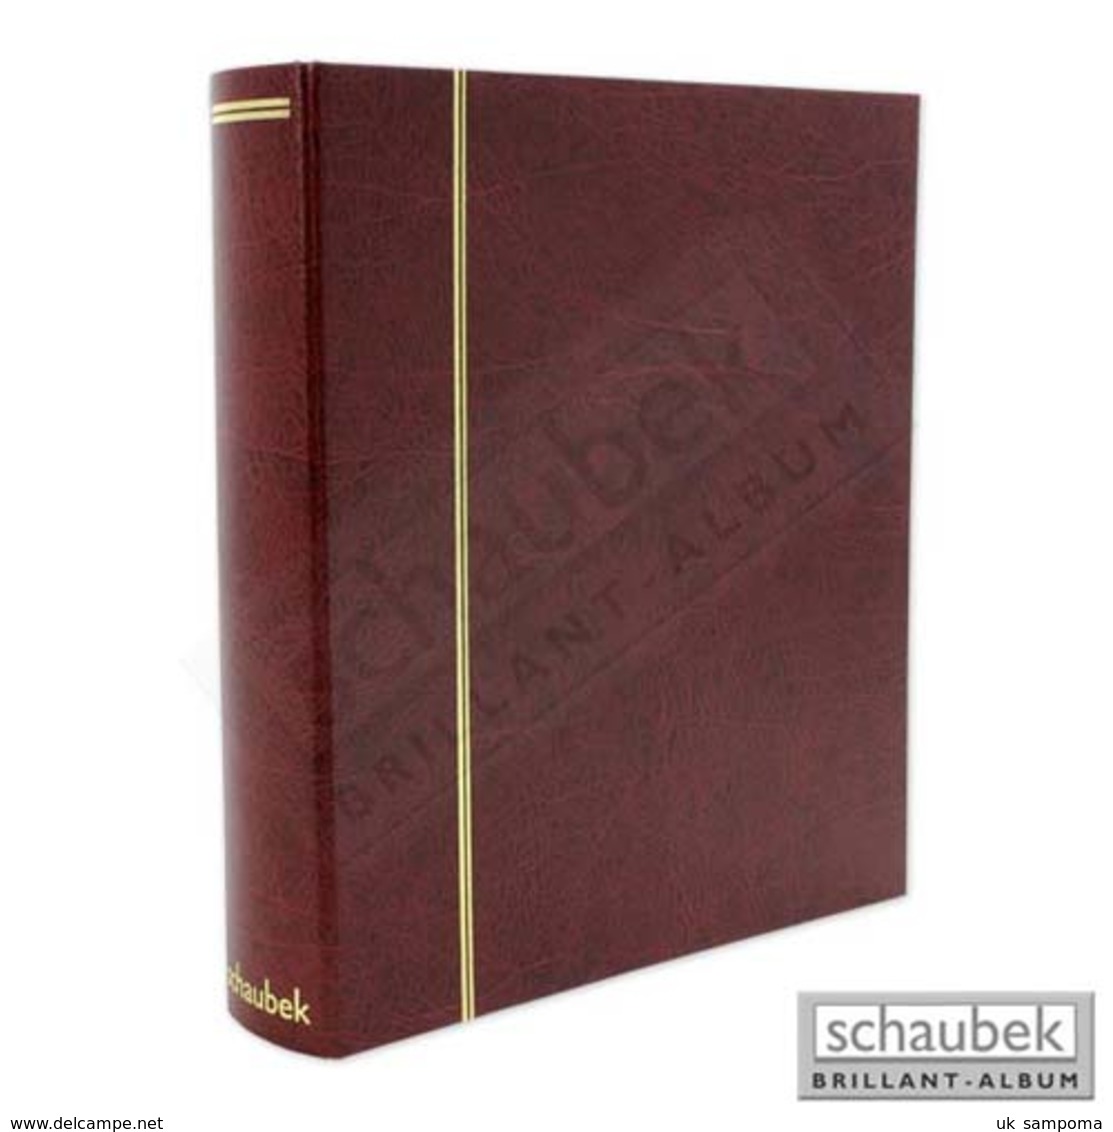 Schaubek Rb2061 Ring Binder Diplomat, 4 Rings Leatherette Red - Large Format, Black Pages